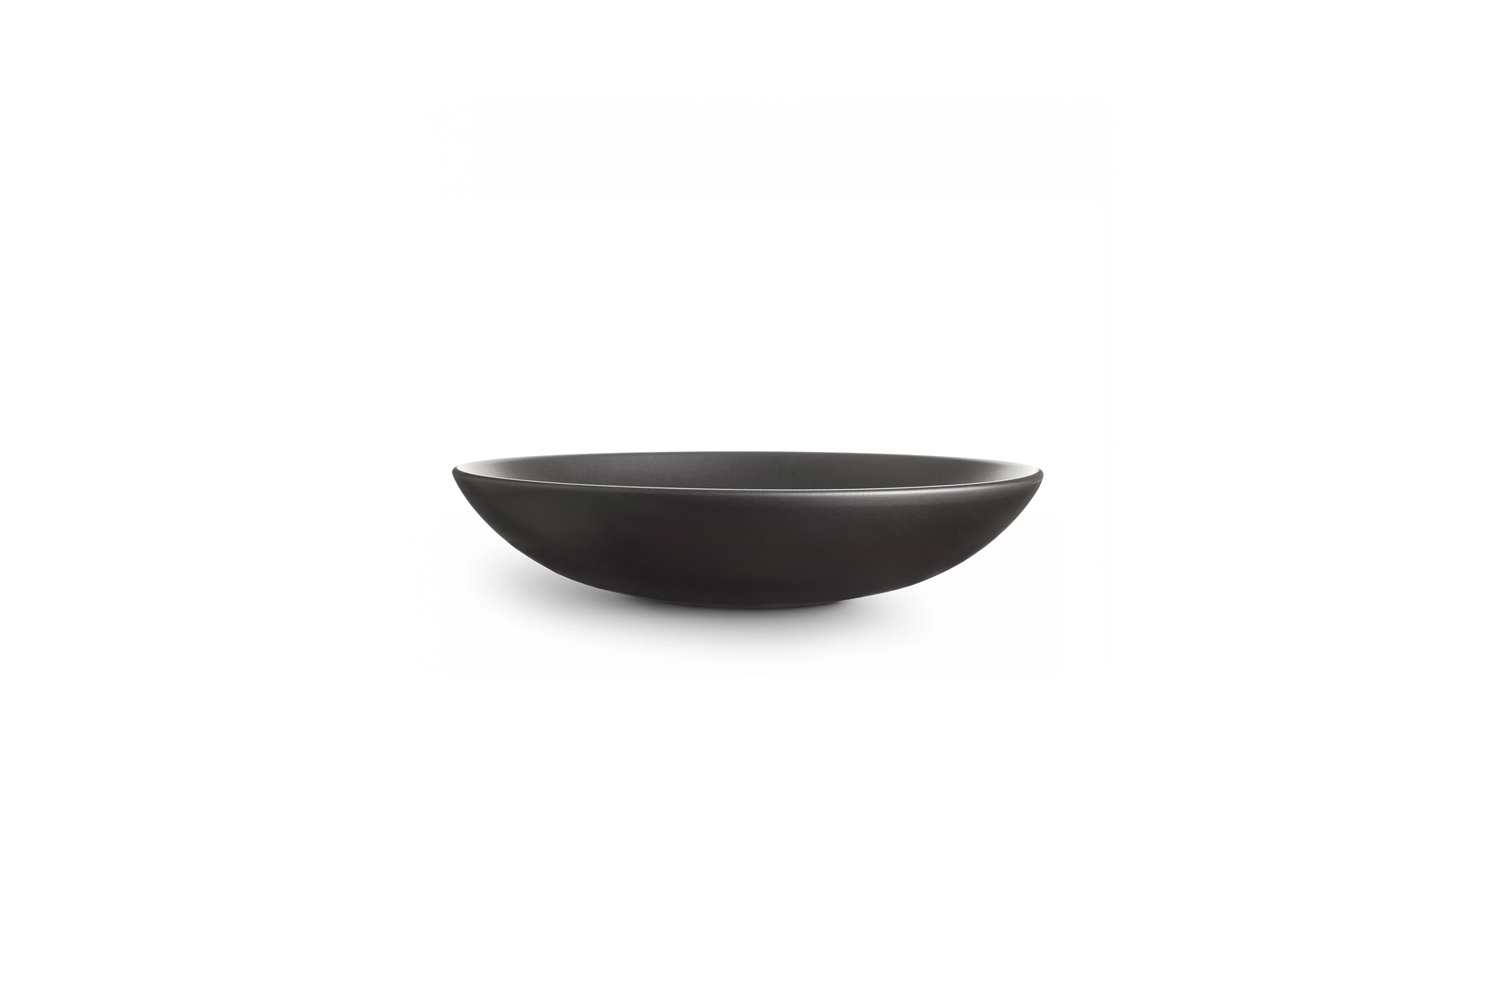 the heath ceramics shallow salad bowl in onyx is \$\175. 19